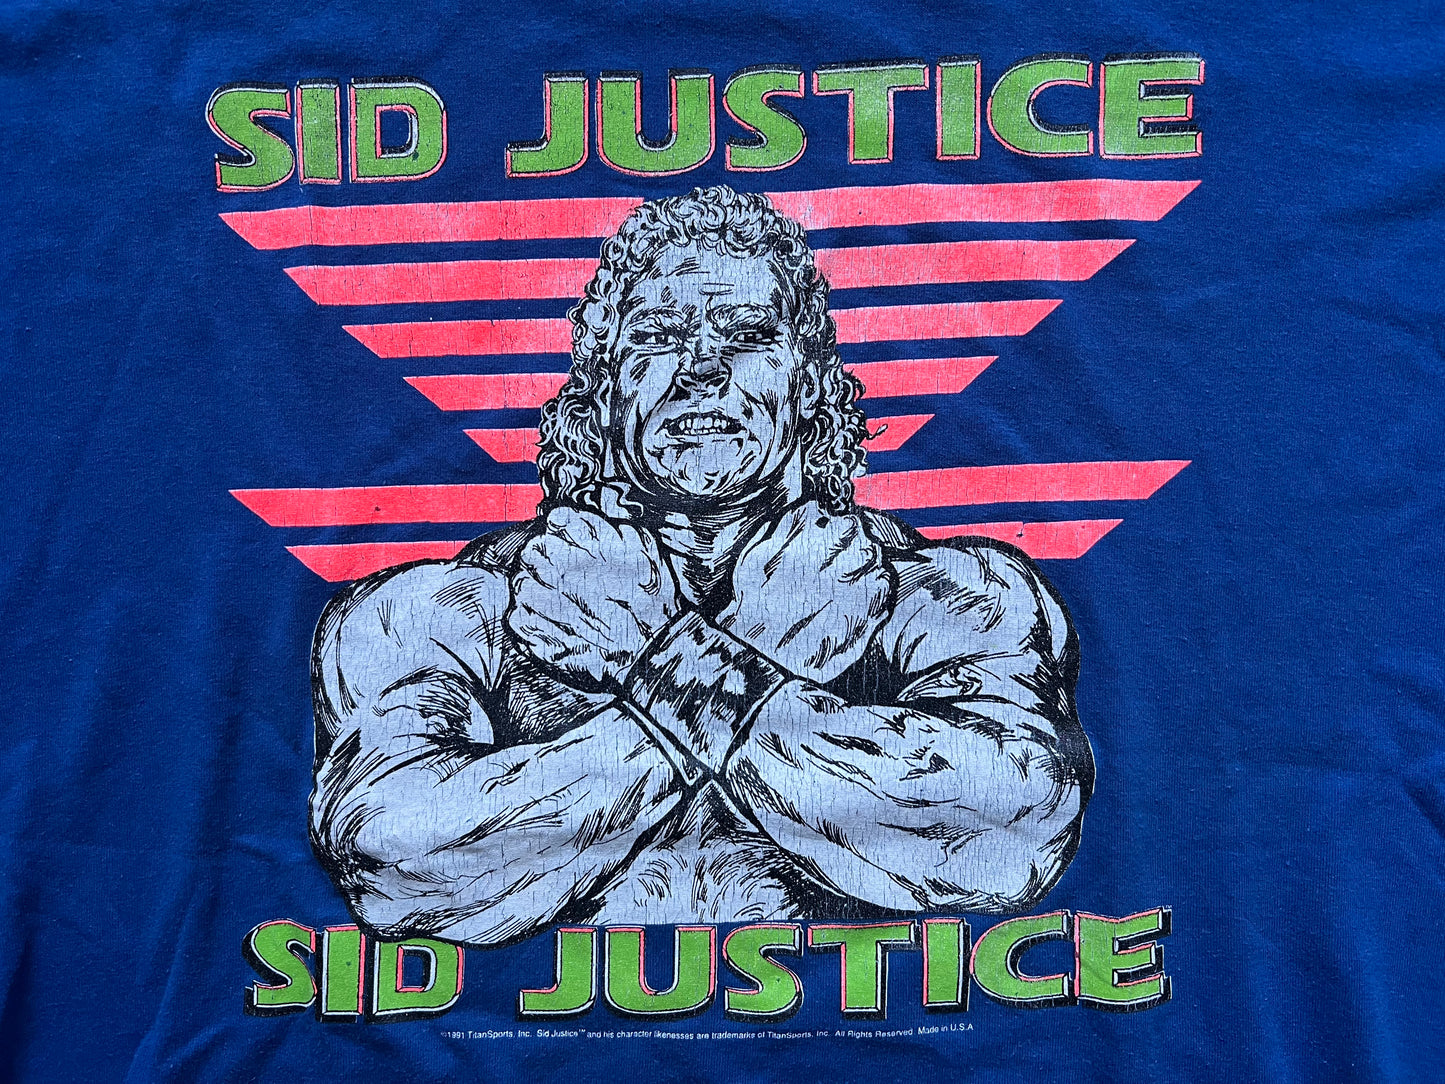 1992 WWF Sid Justice shirt